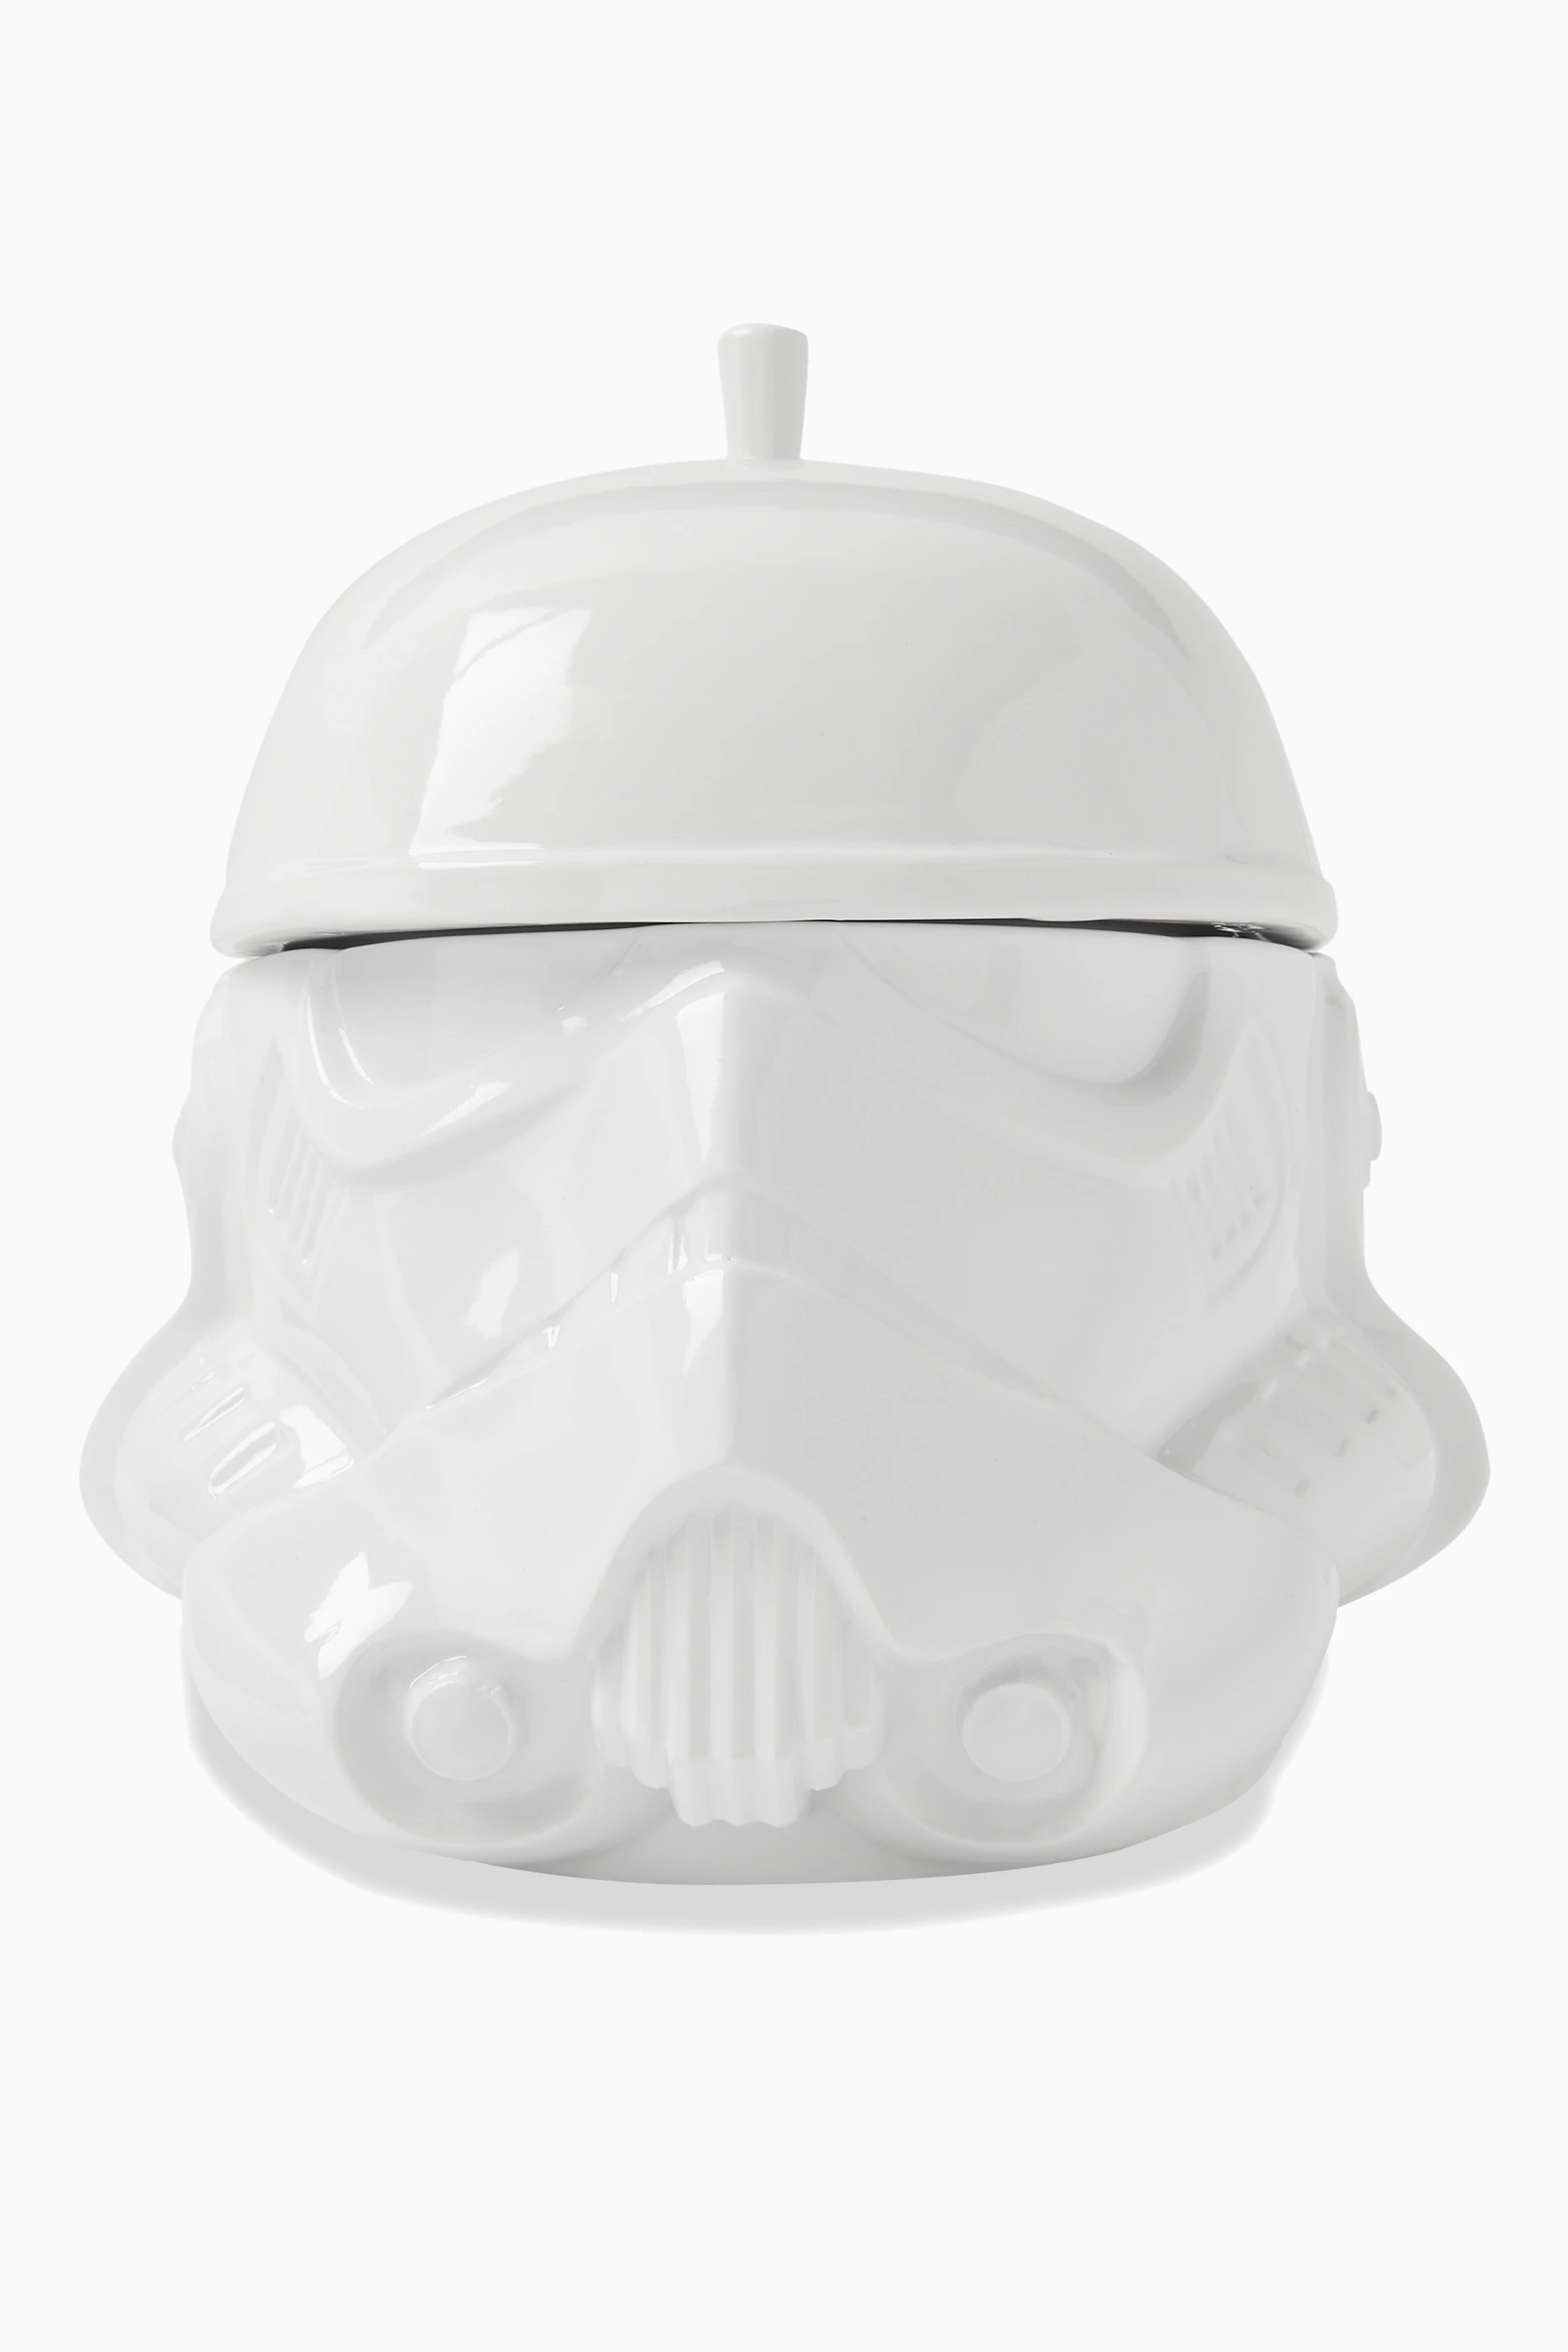 Buy Kith White x Star Wars Stormtrooper Cookie Jar in Ceramic for